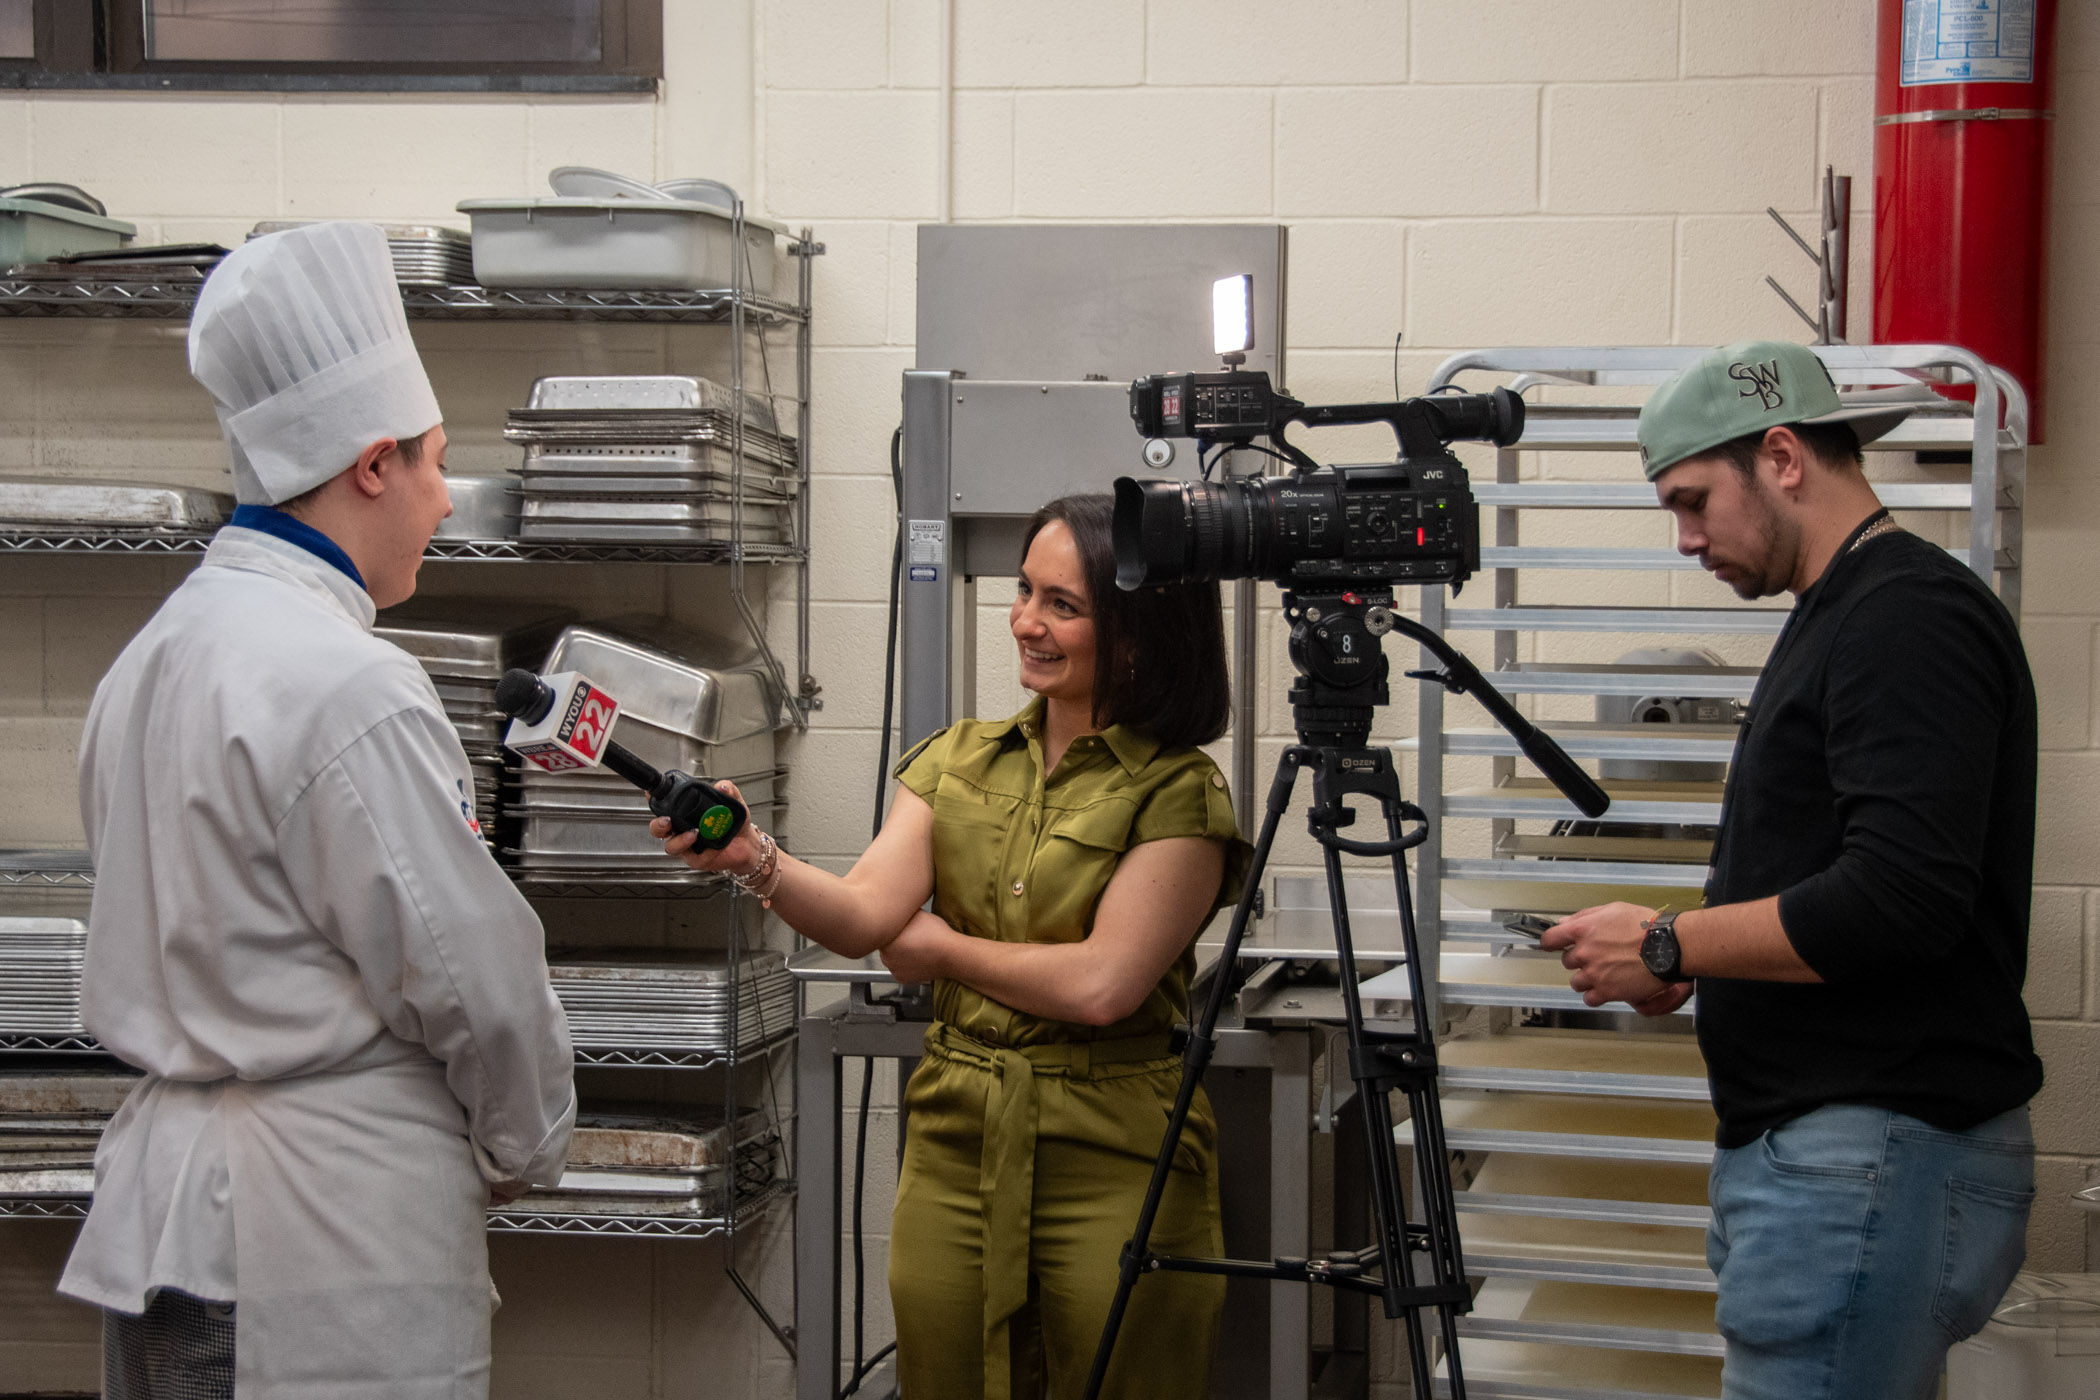 'Eyewitness News' team visits culinary labs